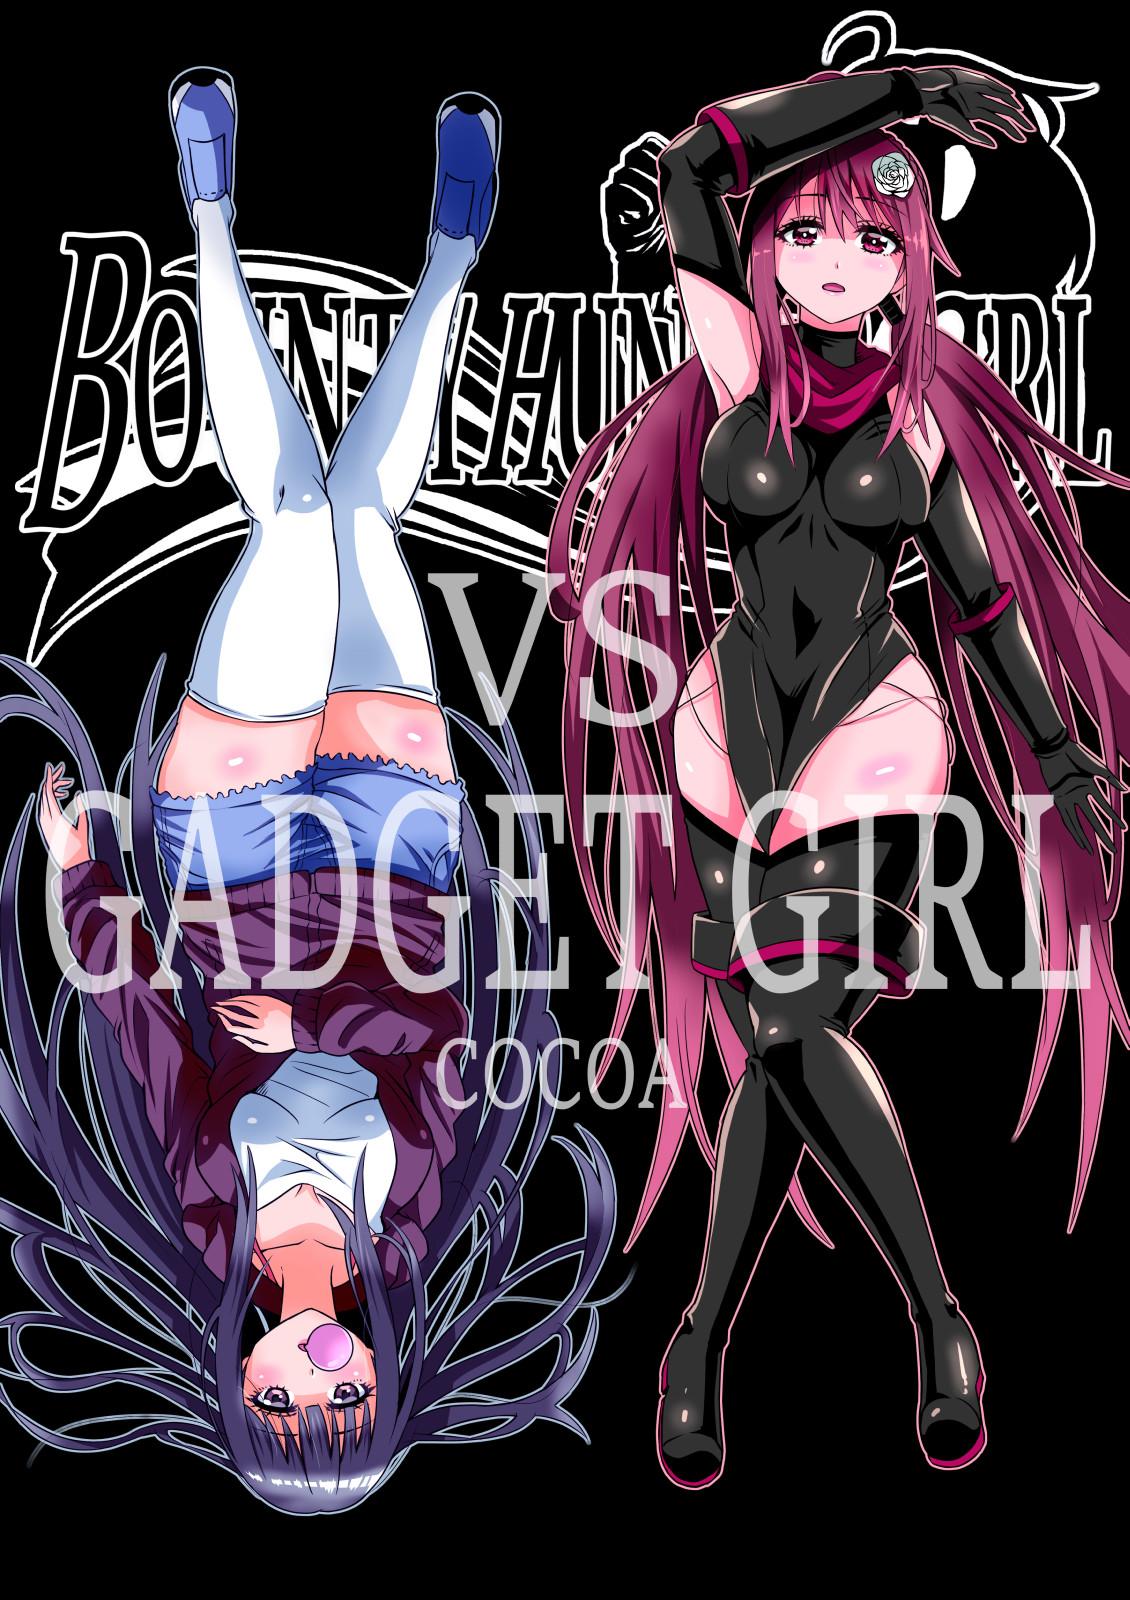 BOUNTY HUNTER GIRL vs GADGET GIRL 第22話 [COCOA]  0